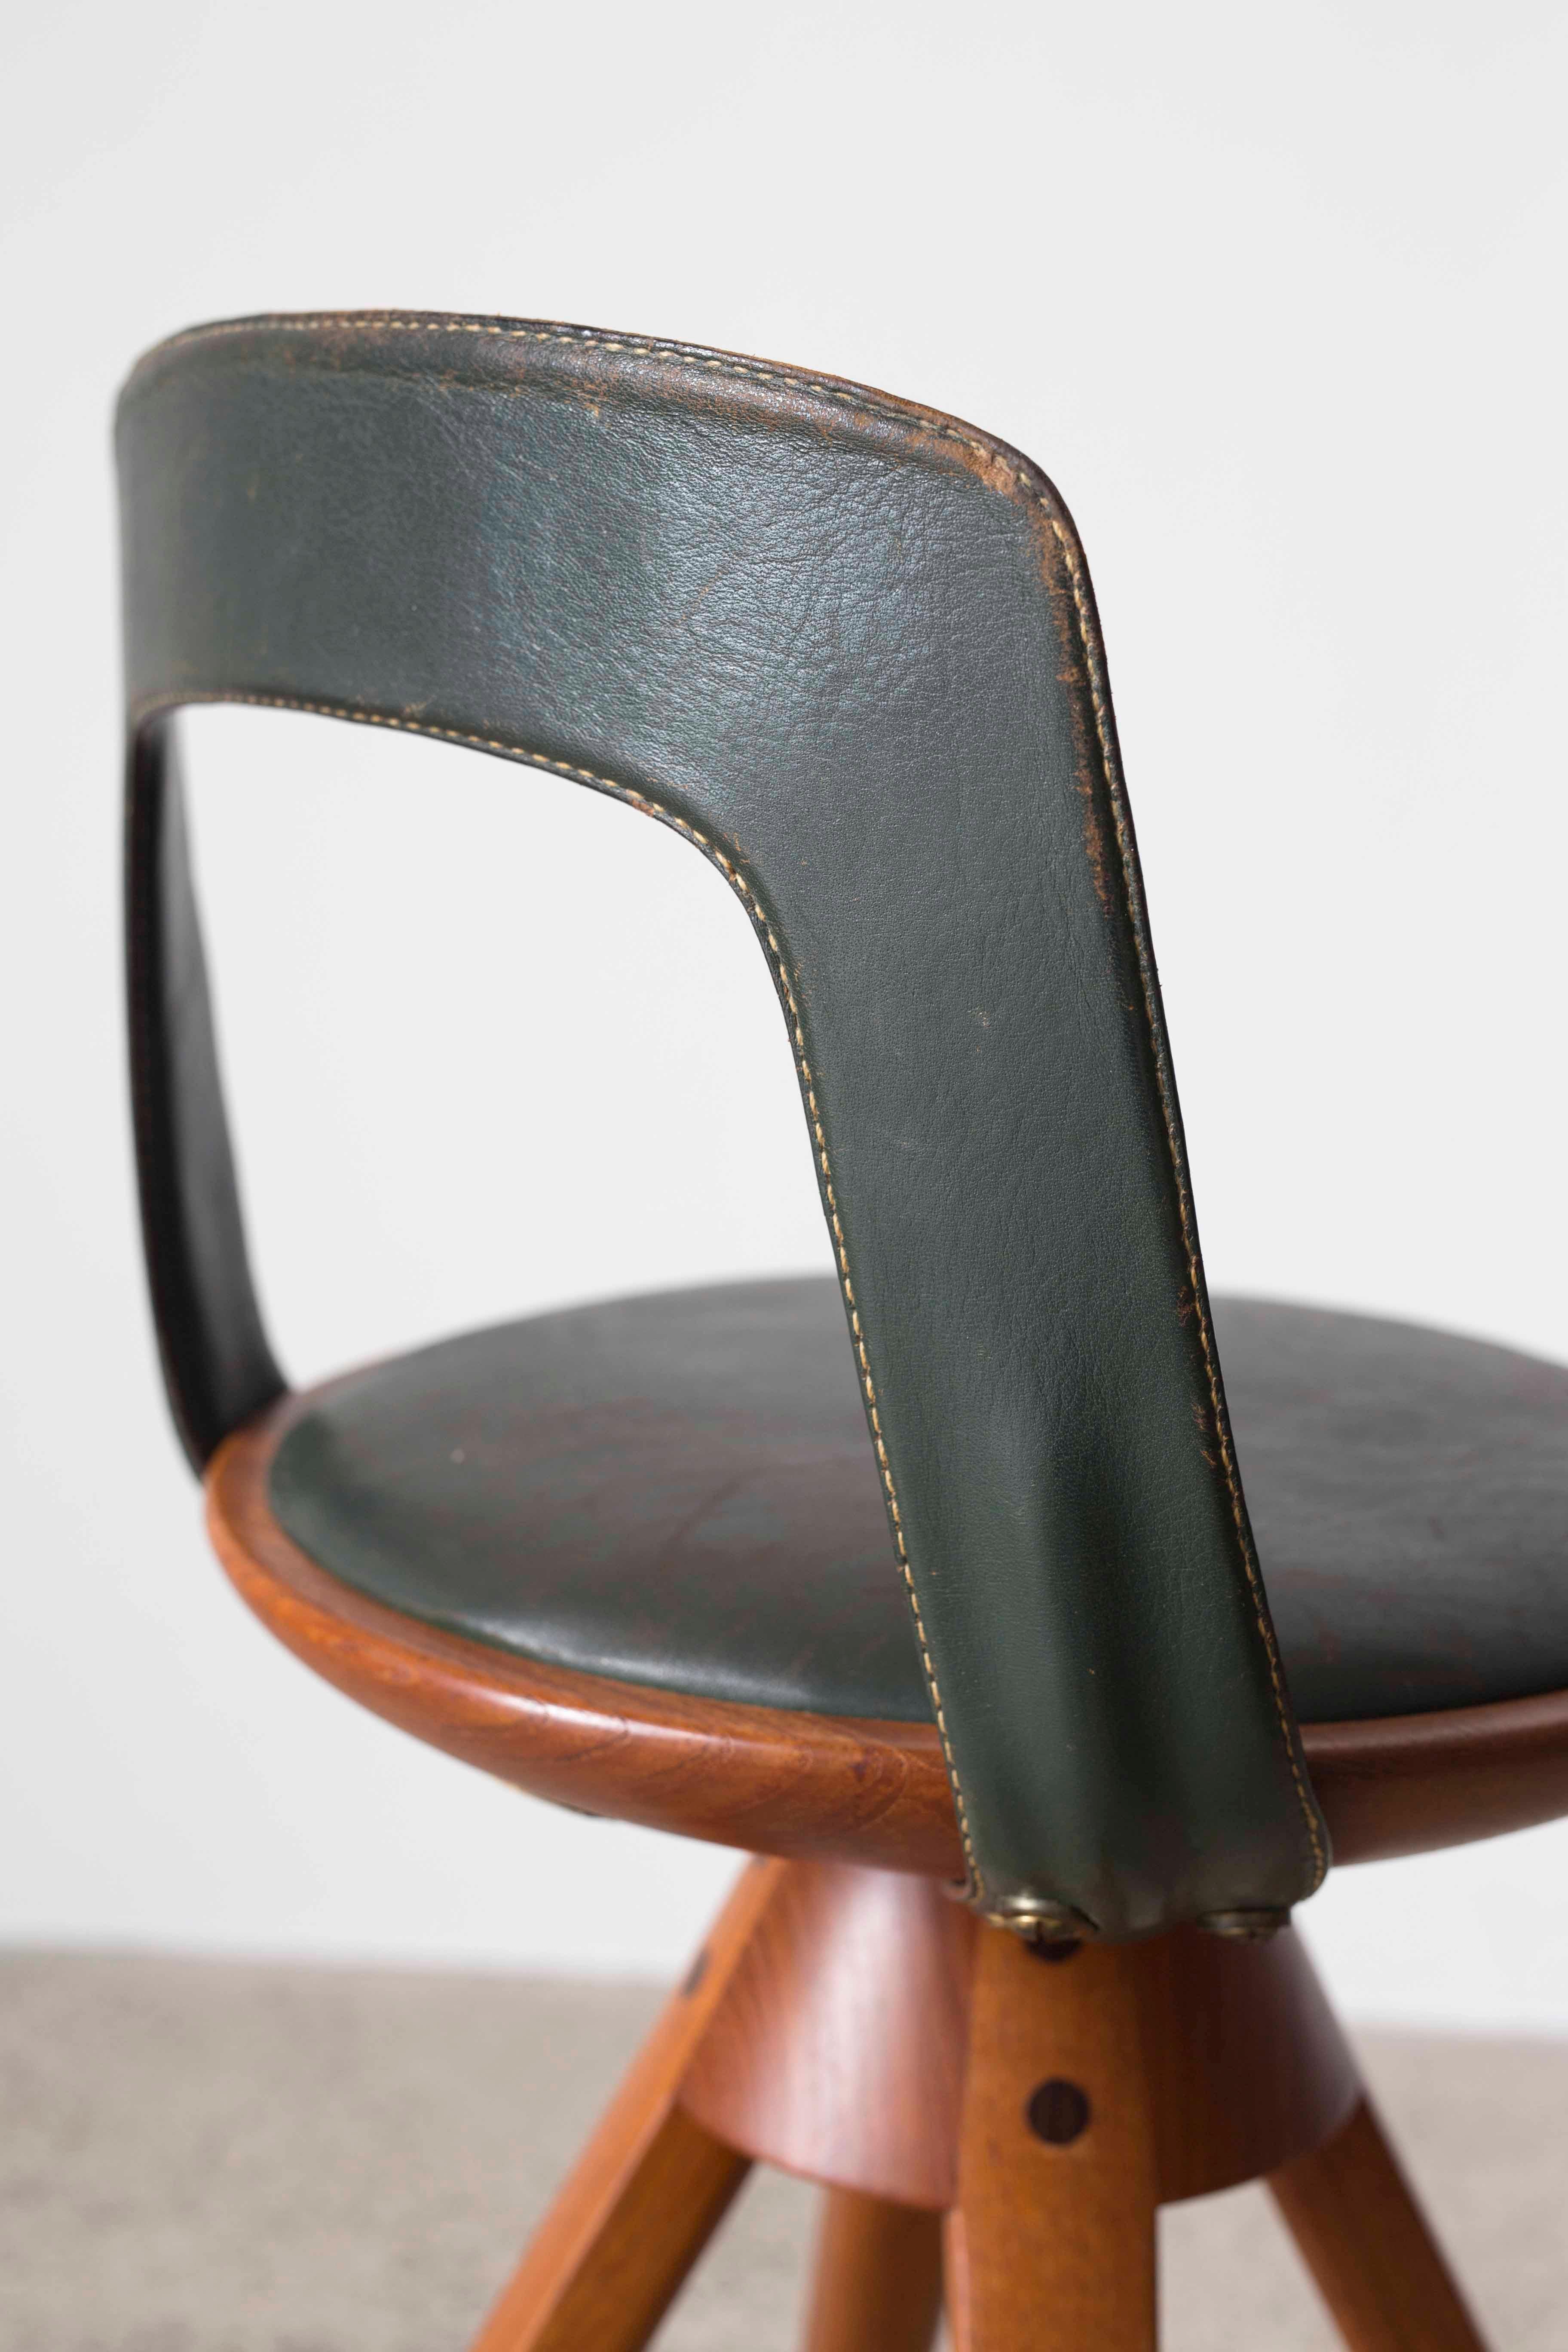 Tove & Edvard Kindt-Larsen swivel stool in teak and original dark green leather. Designed 1957, manufactured and marked by cabinetmaker Thorald Madsen, Copenhagen. 

